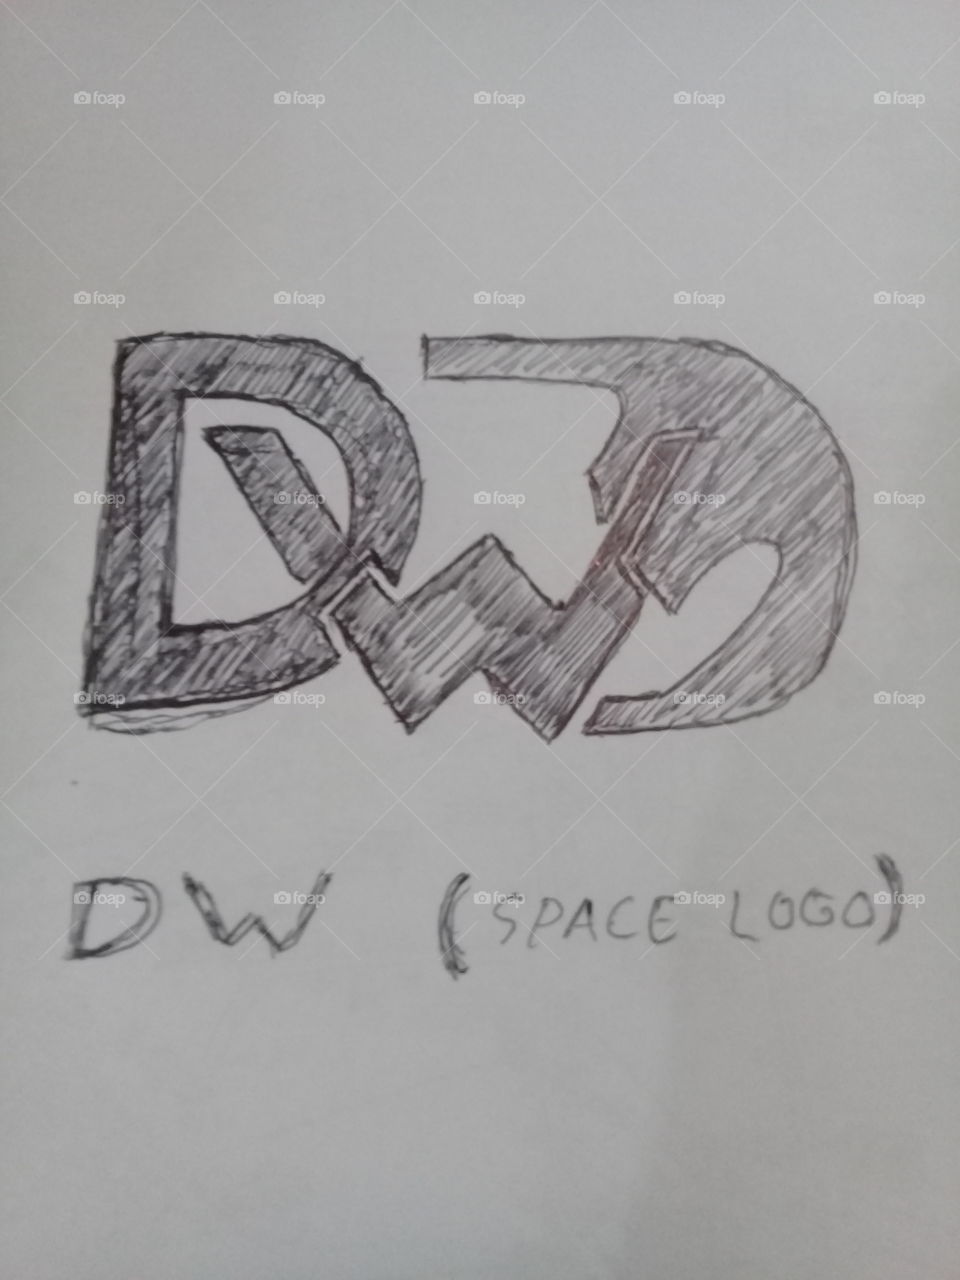 DW / D n W